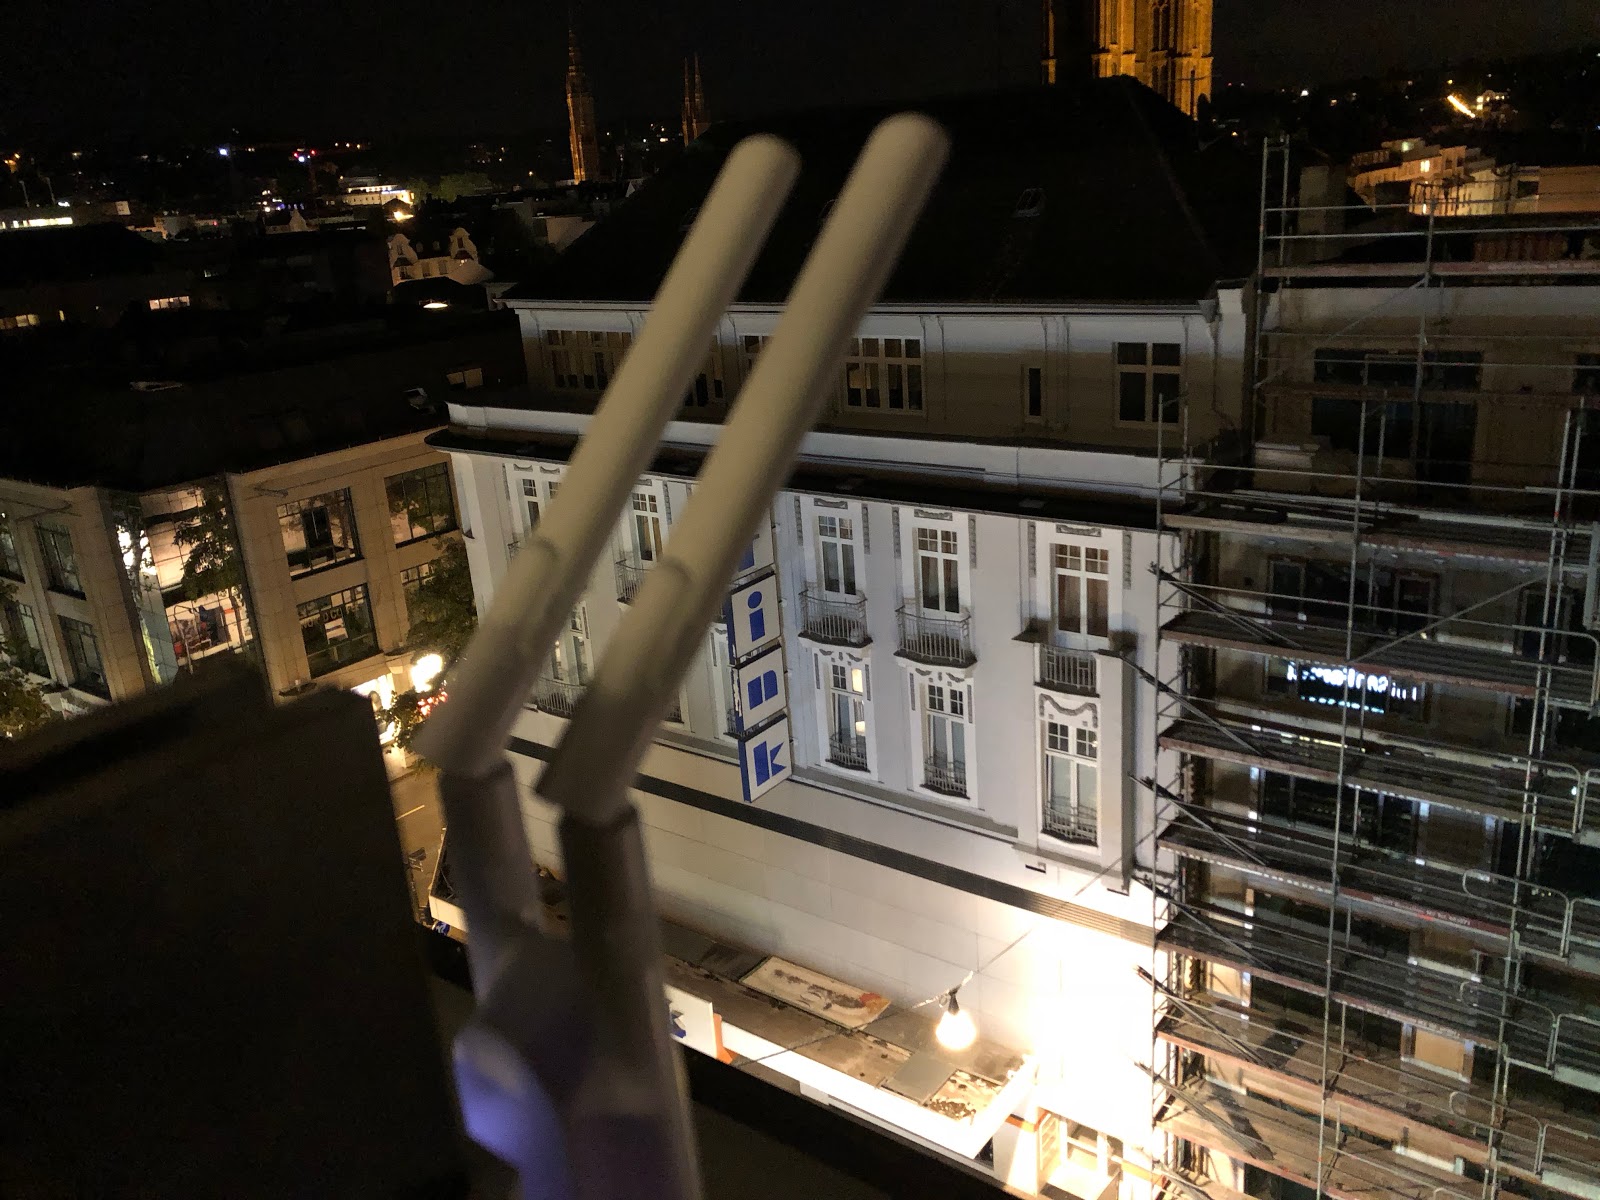 Community Wi-Fi hotspot at night in Wiesbaden